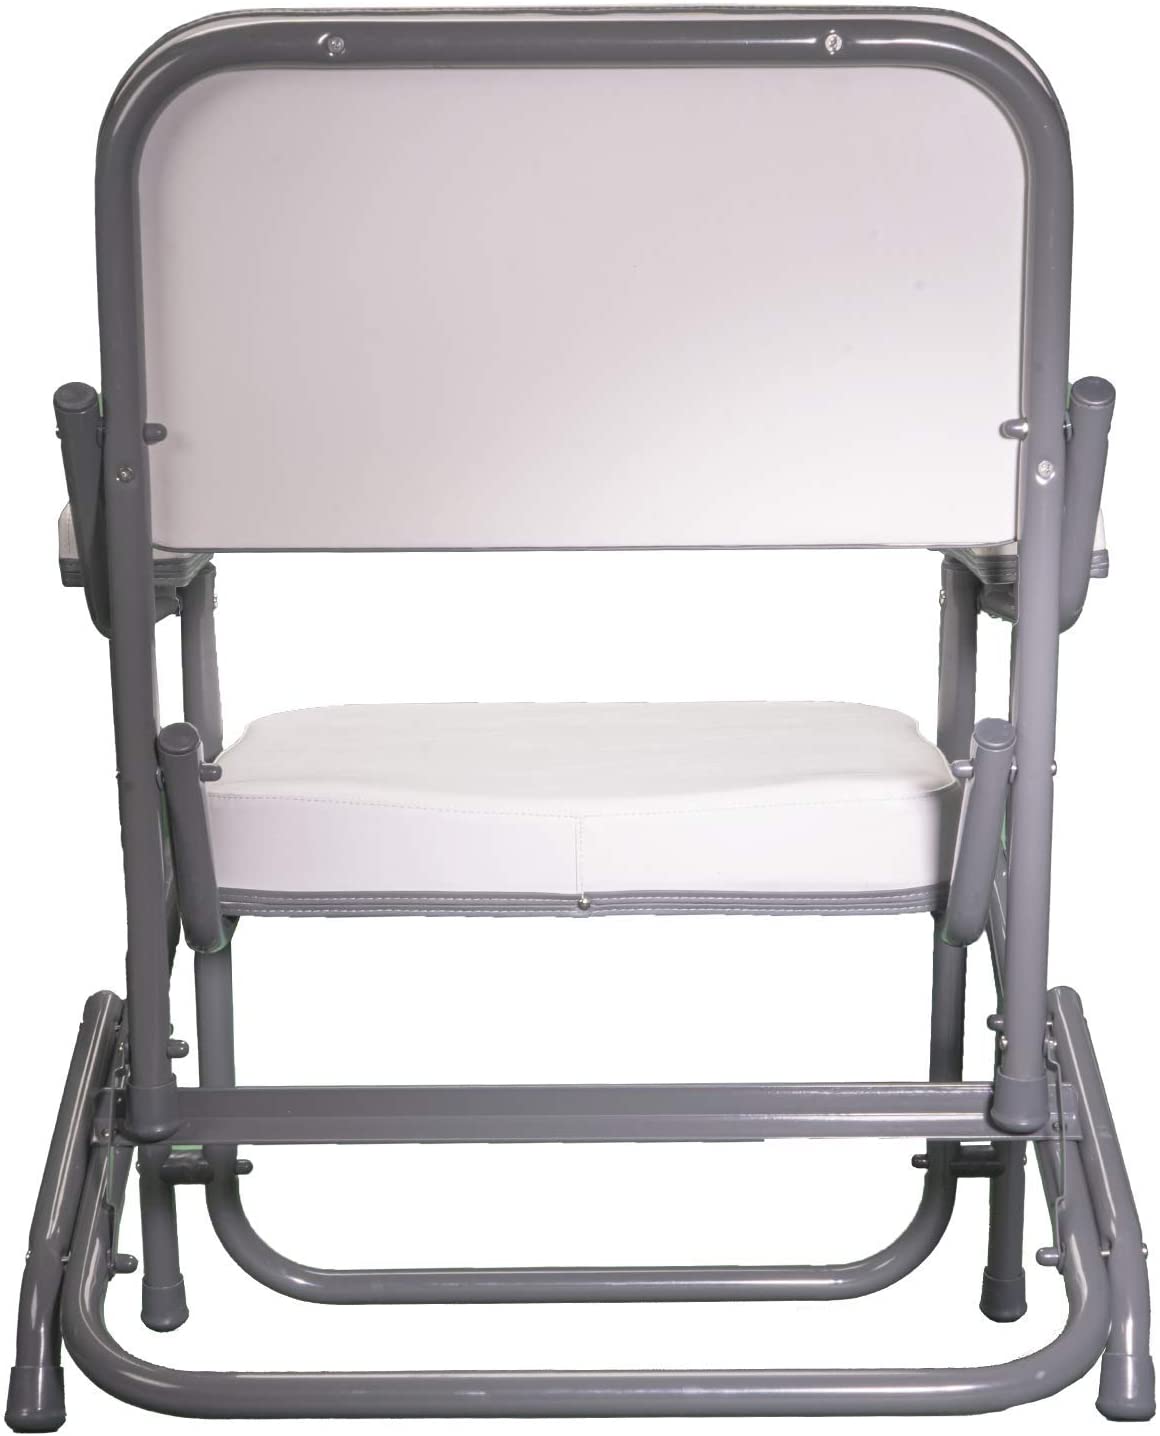 Pactrade Marine Folding Deck Chair White UV Resistant Vinyl